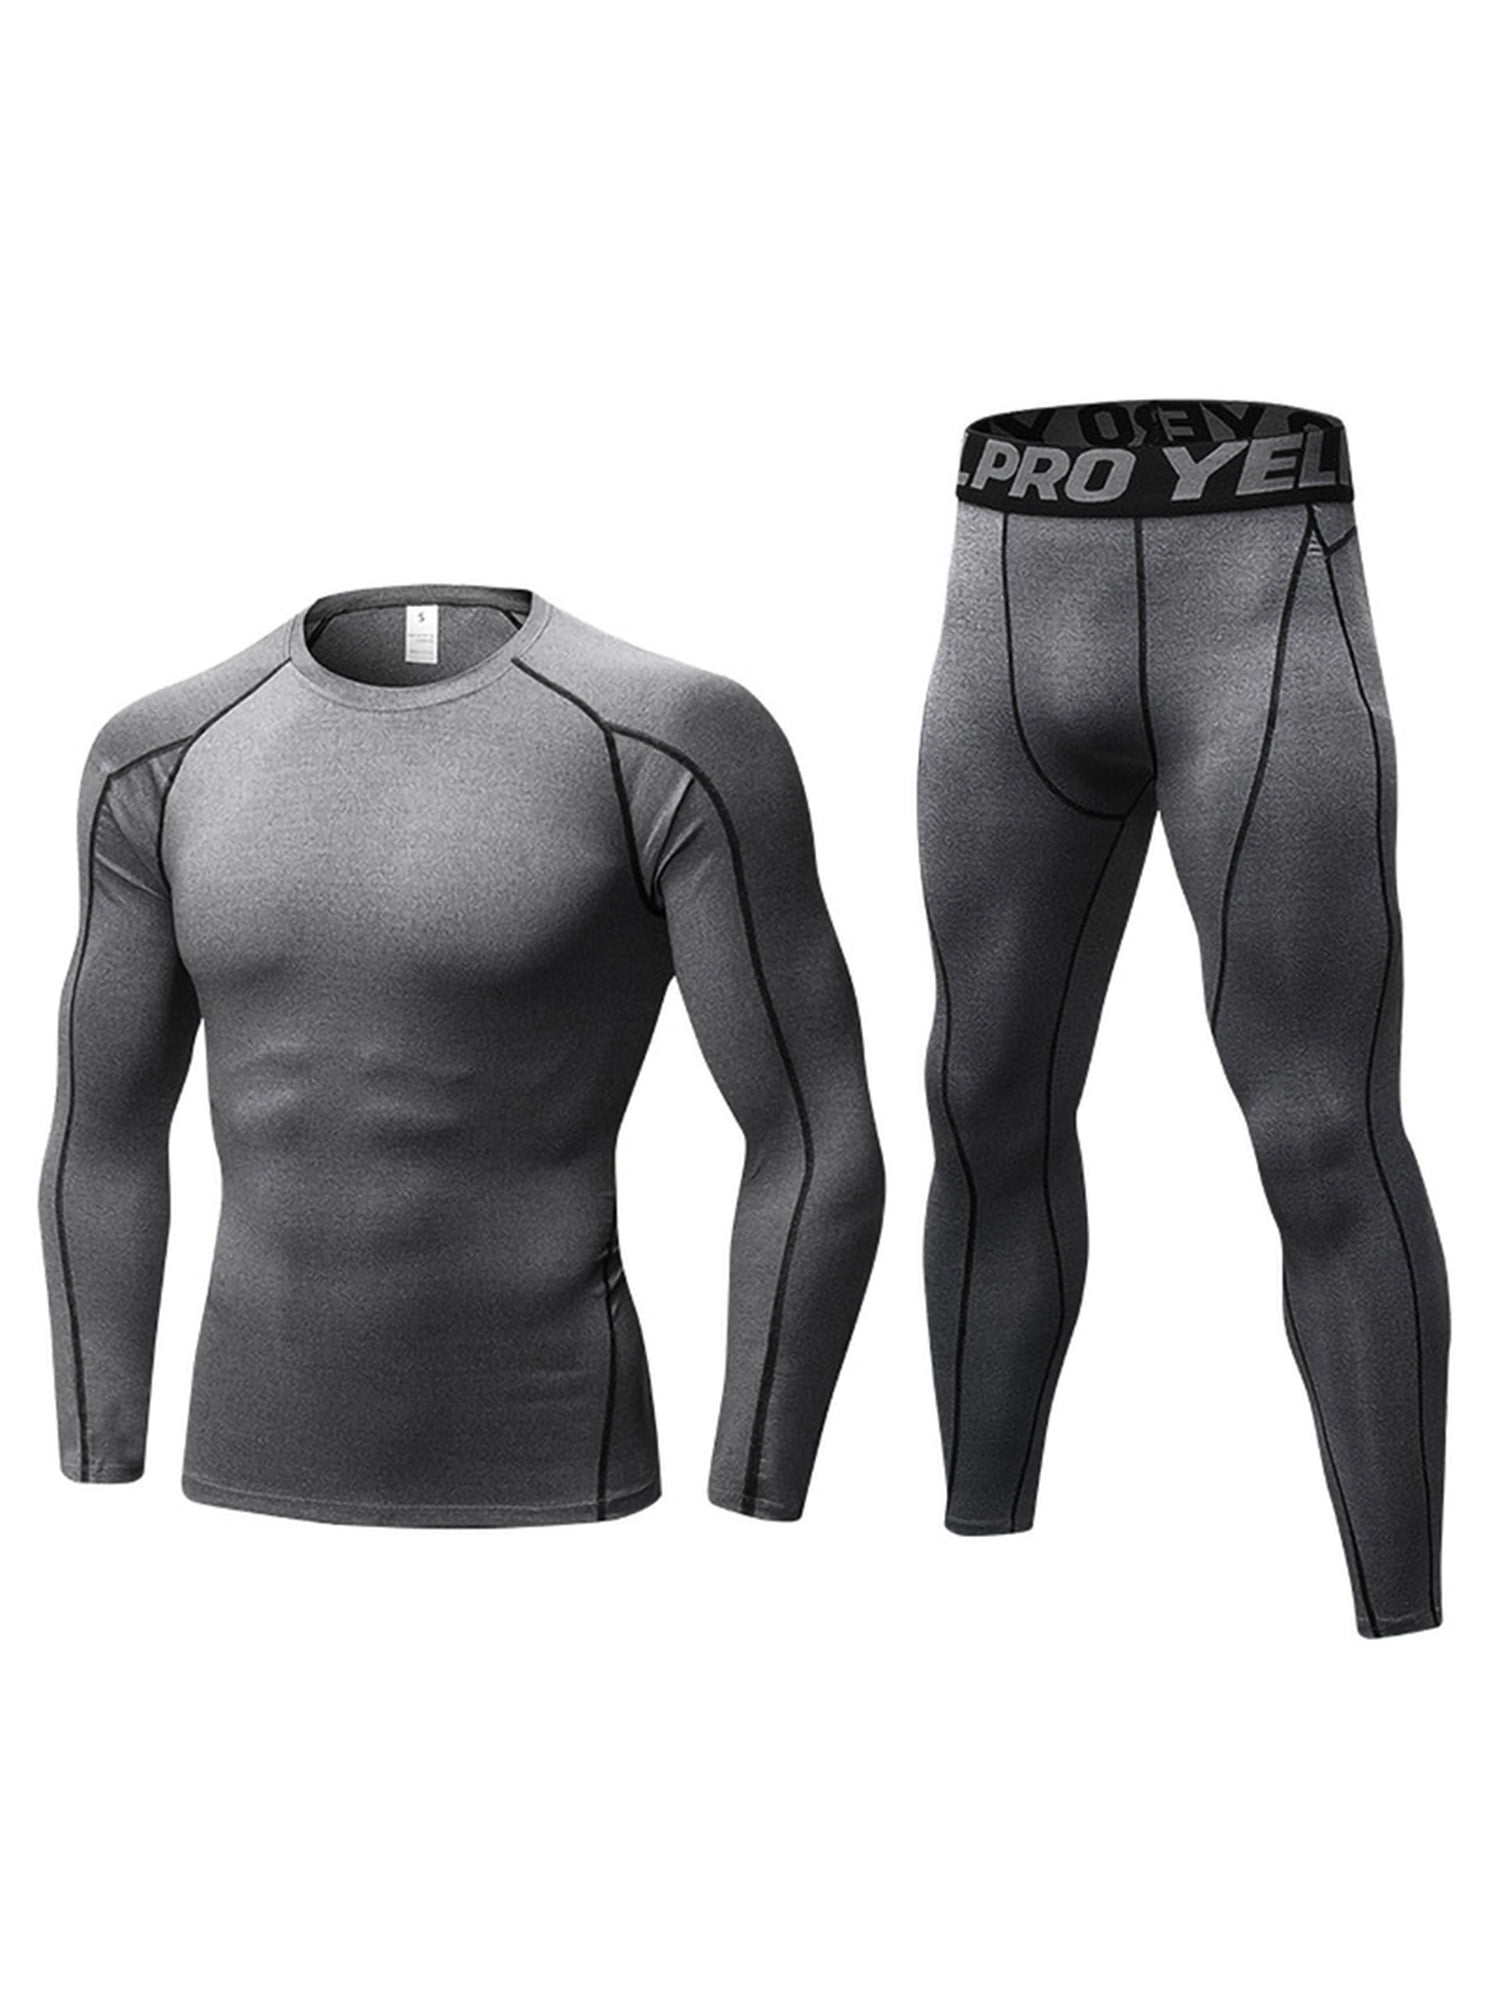 Men Compression Elasticity Base Layer Tights Shirt Pant Under Full Suit Skin Fit